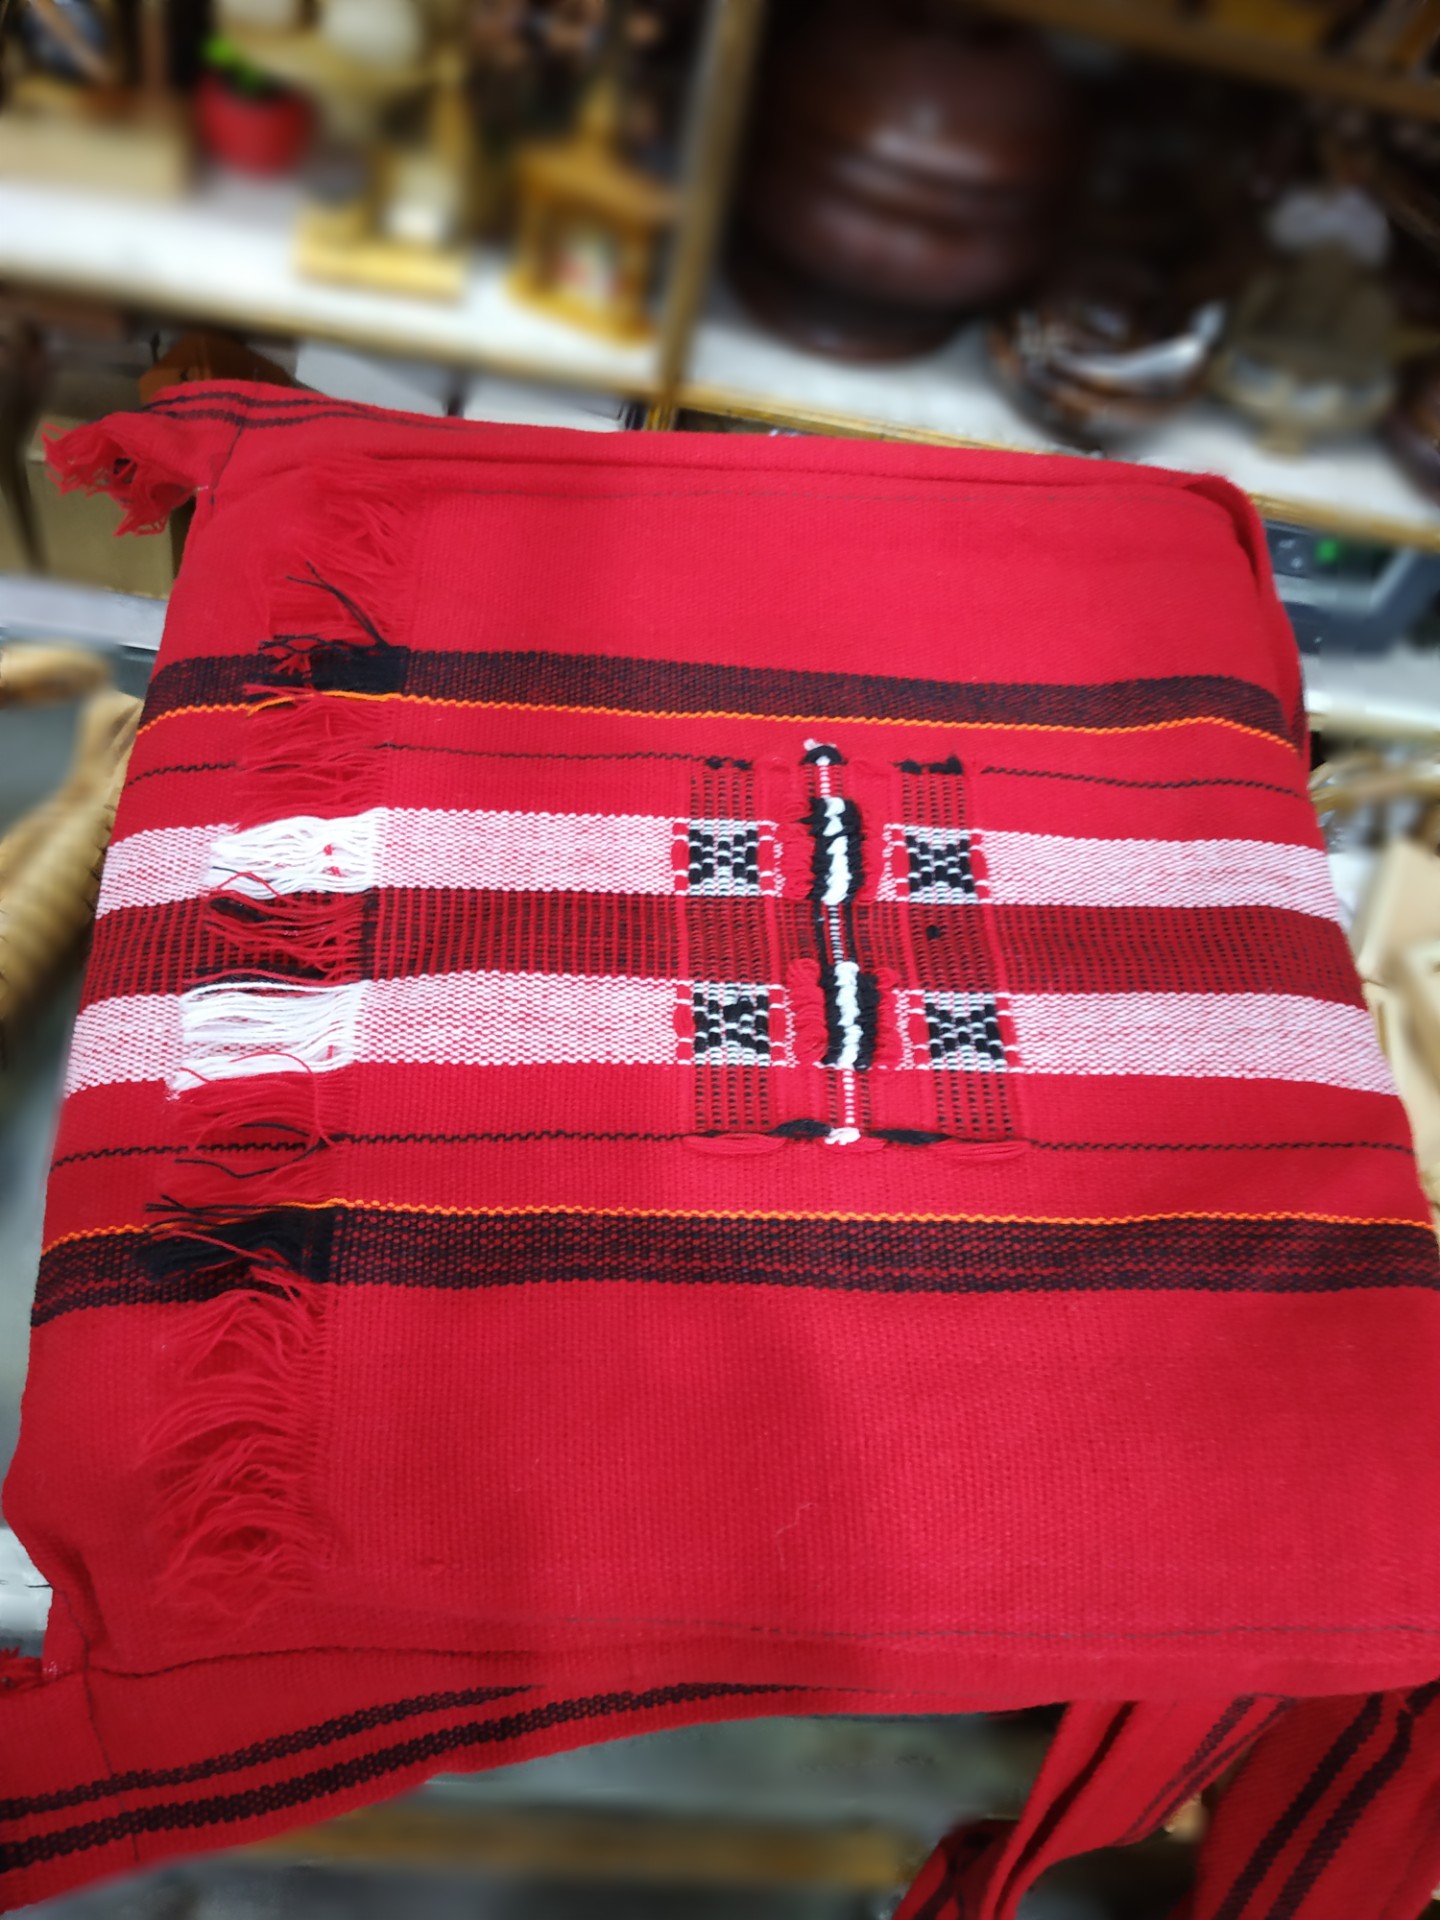 Buy Kalamargam Women's Naga Weave and Vegan Leather Sling Bag (Multicolour)  at Amazon.in